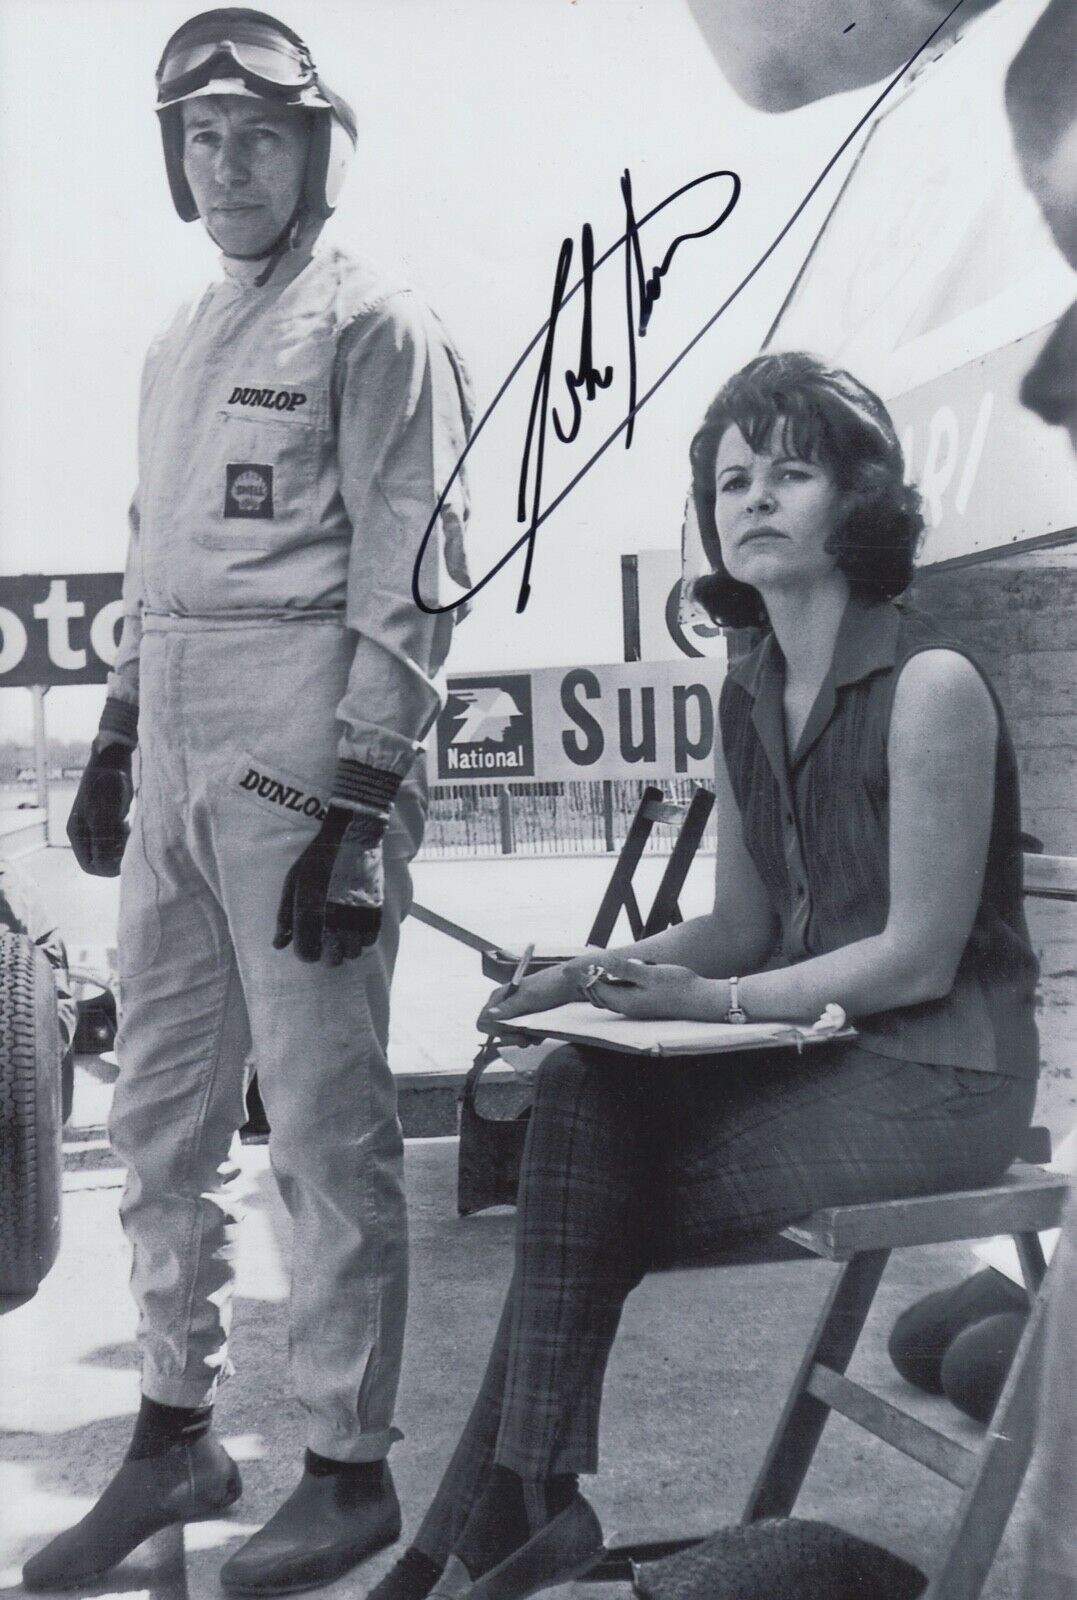 John Surtees Hand Signed 12x8 Photo Poster painting F1 Autograph Formula 1 World Champion